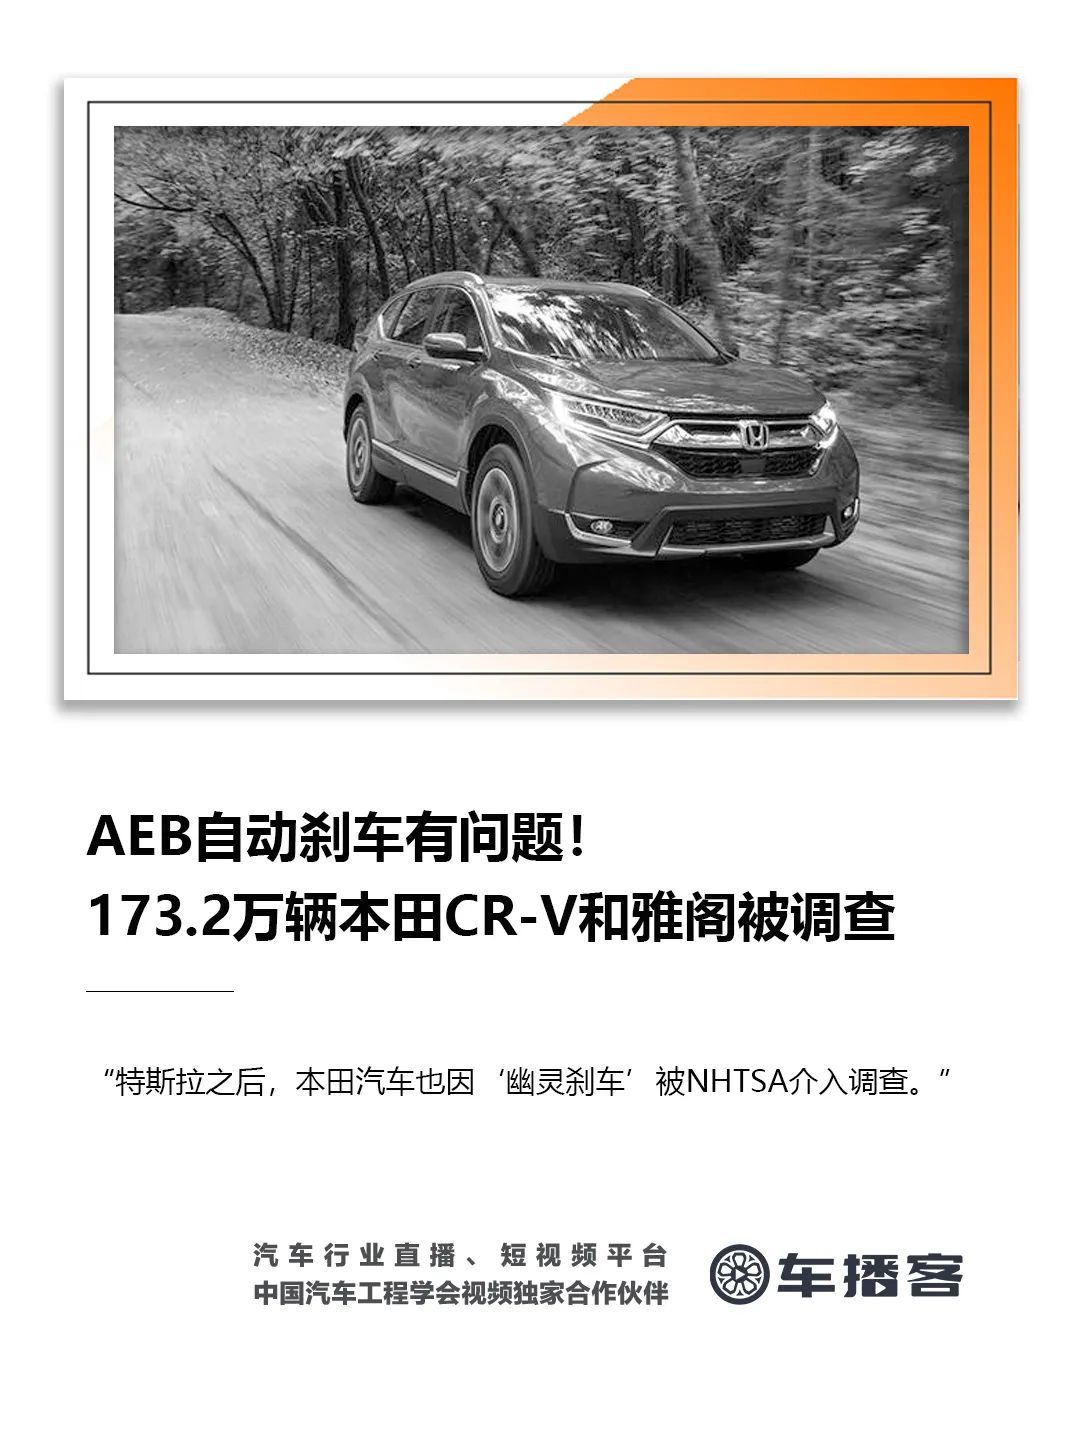 AEB自动刹车有问题！173.2万辆本田CR-V和雅阁被调查